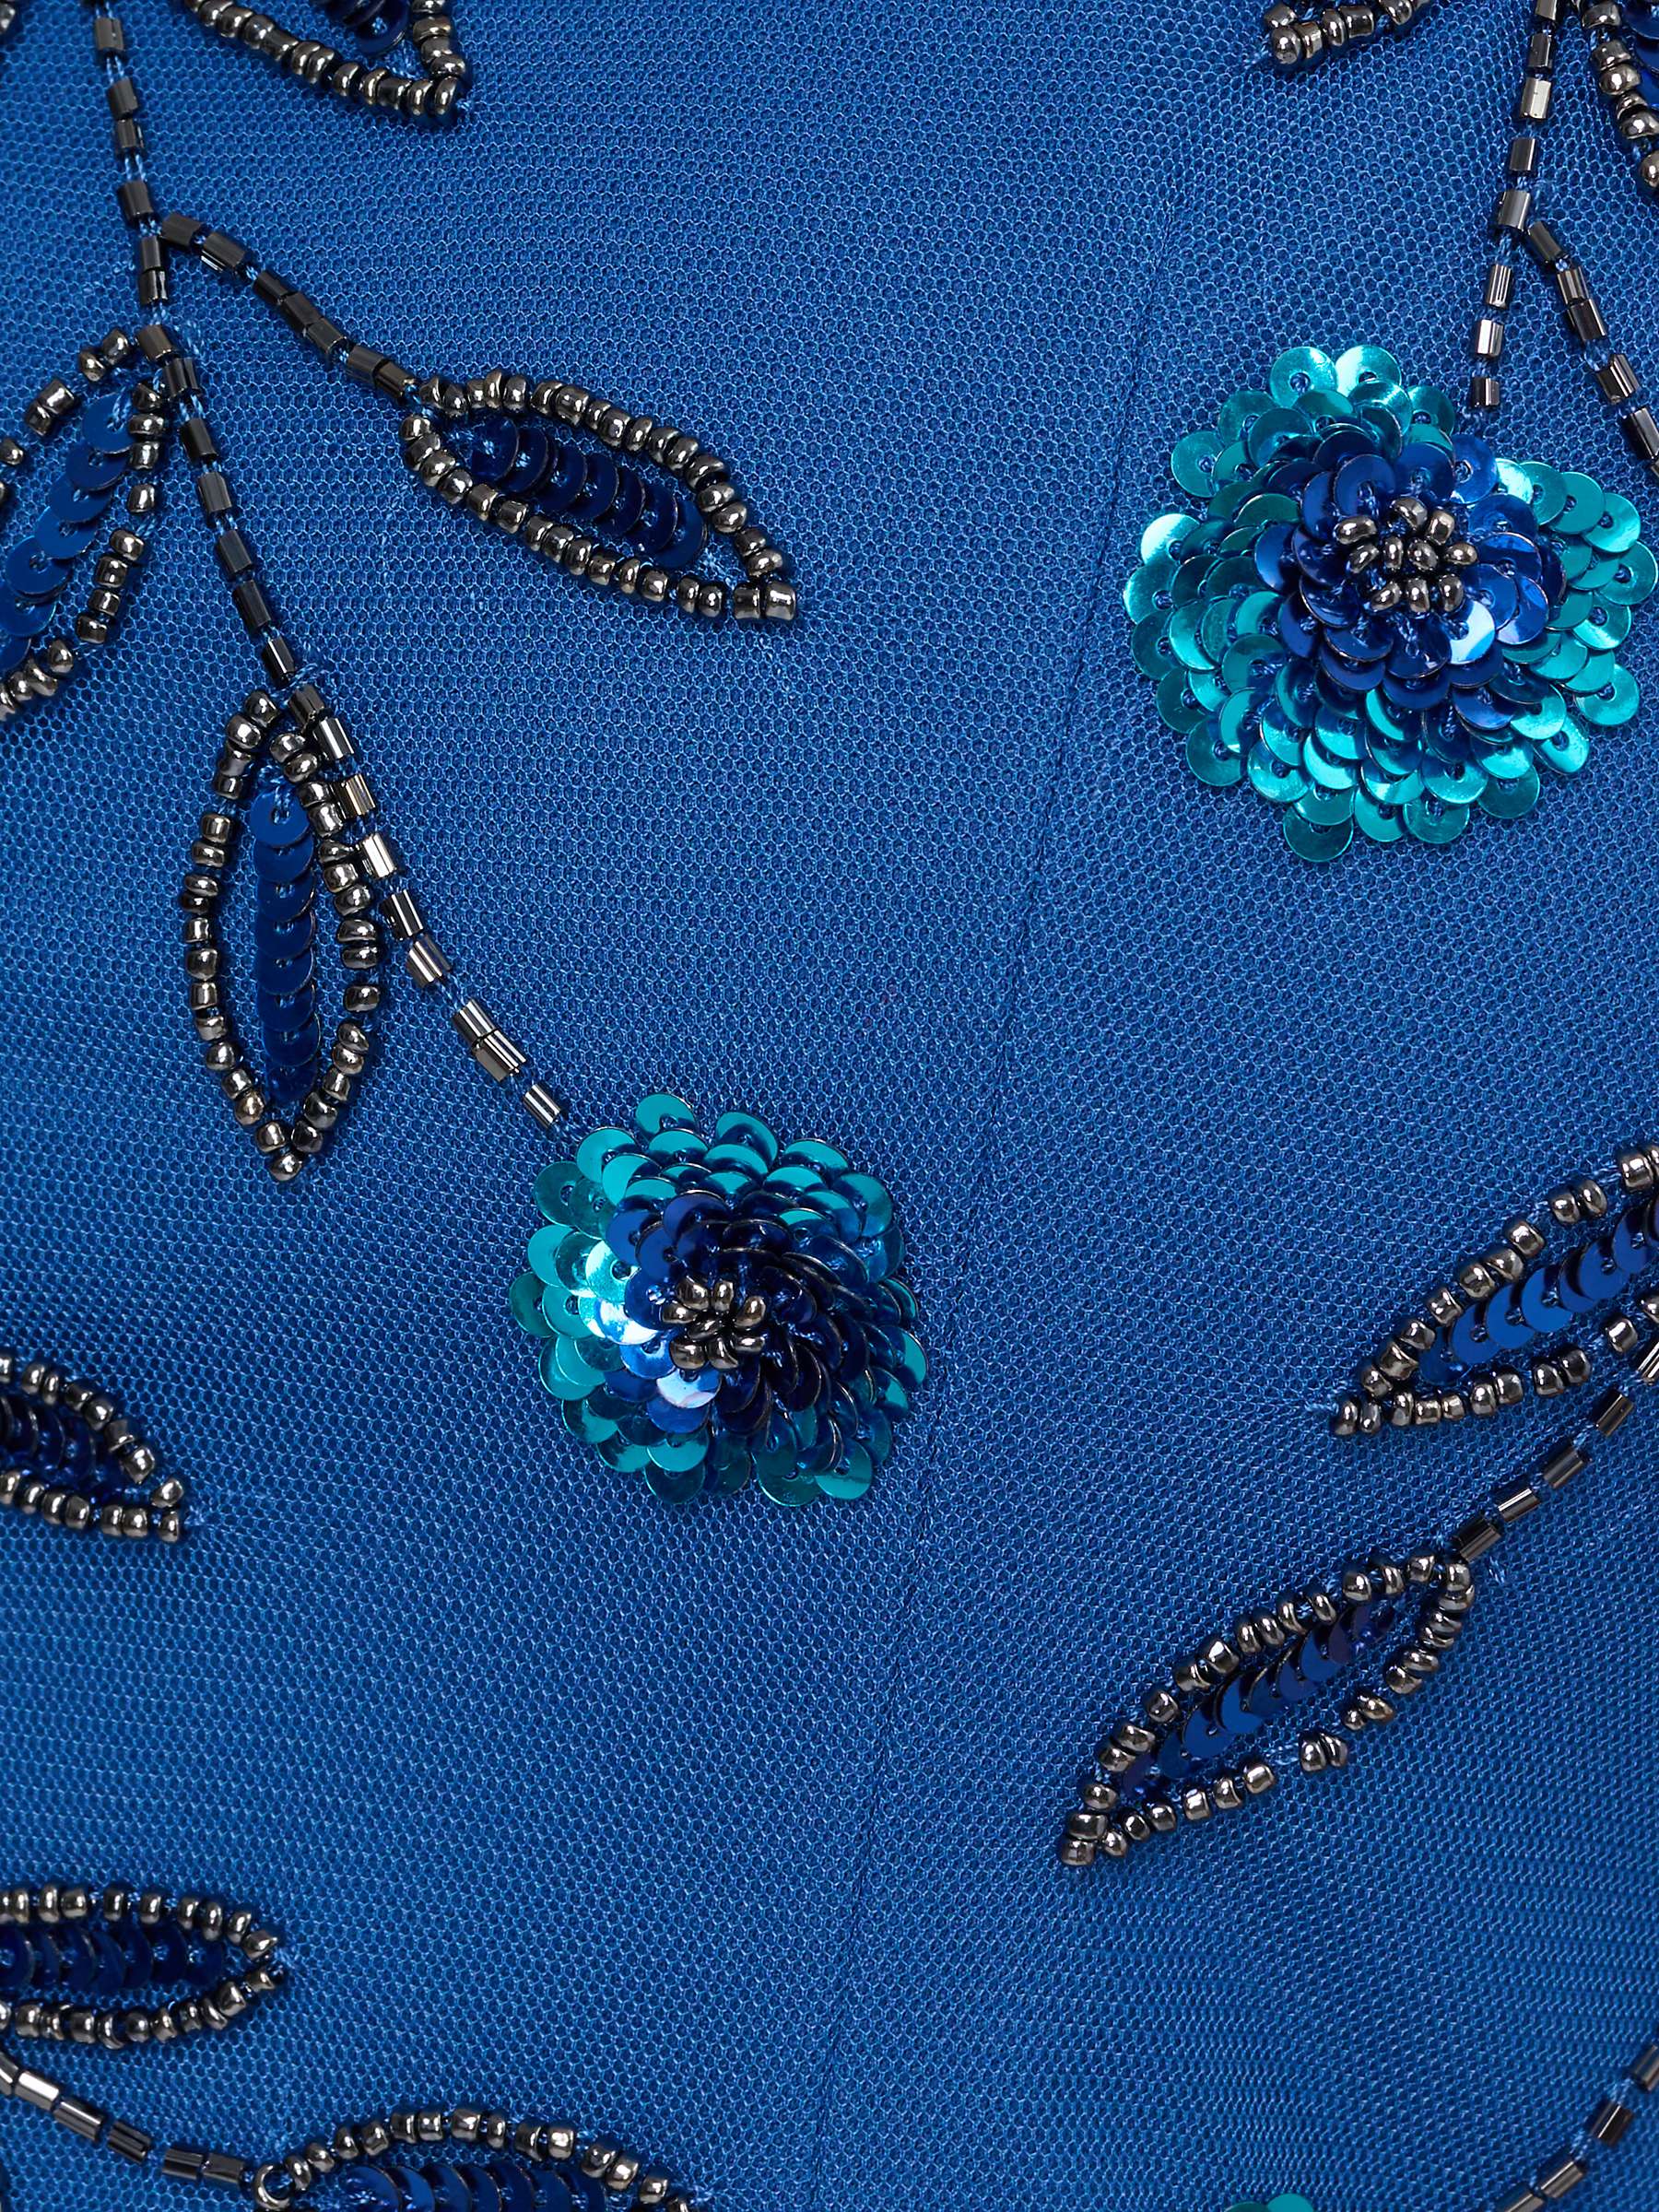 Buy Adrianna Papell Beaded Floral Short Dress, Blue Horizon Online at johnlewis.com